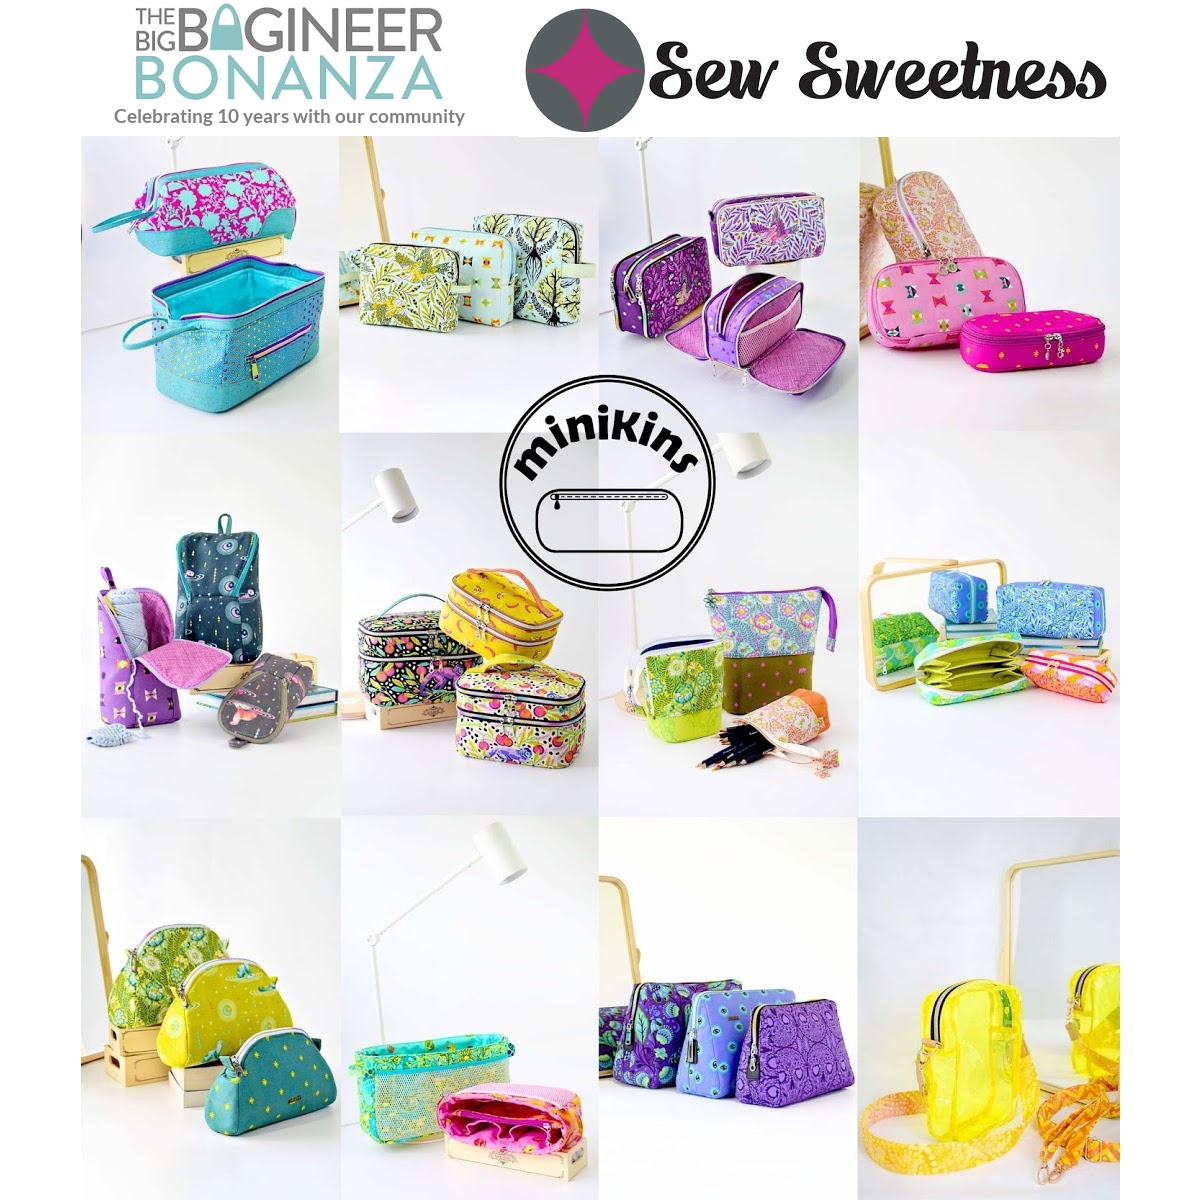 Sew Sweetness, sponsor of The Big Bagineer Bonanza